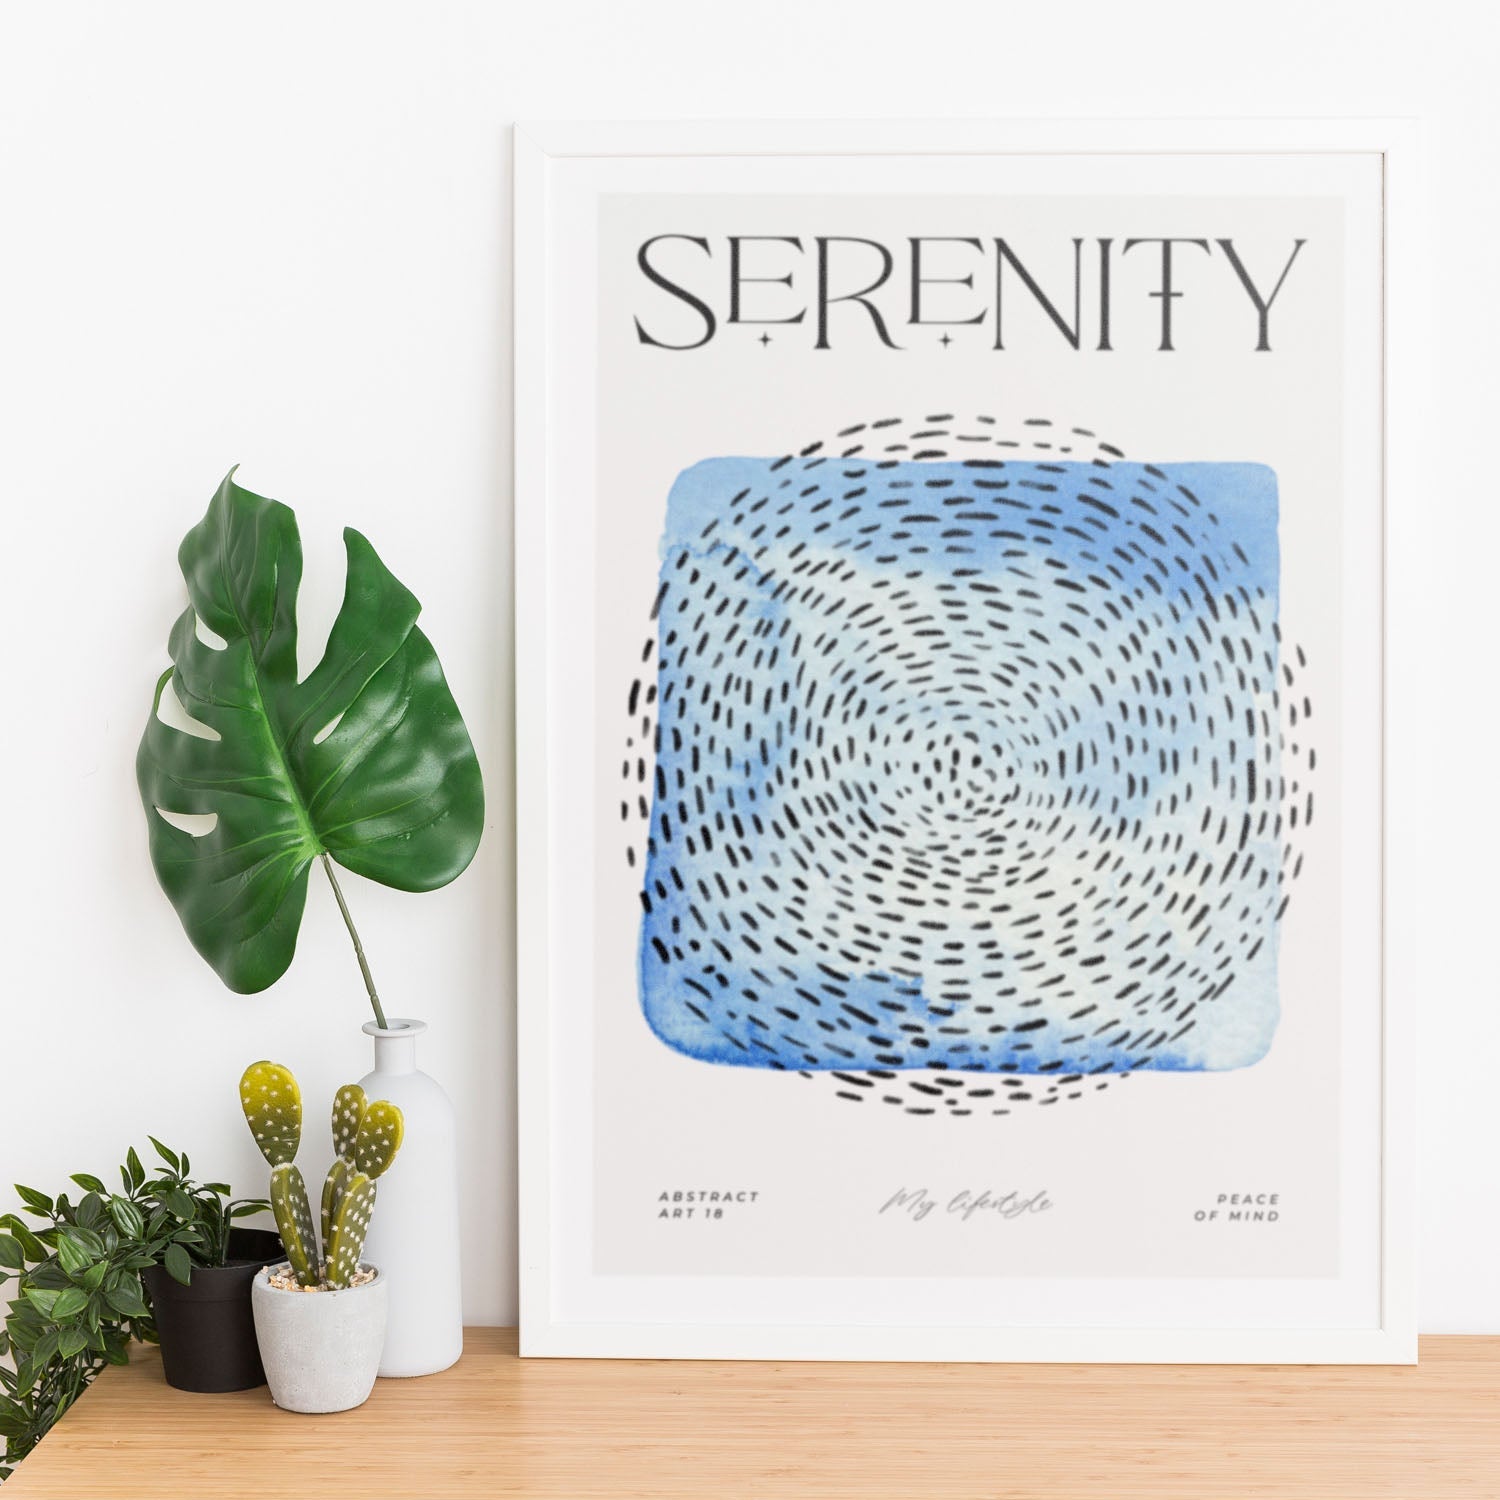 Serenity Mind-Artwork-Nacnic-Nacnic Estudio SL